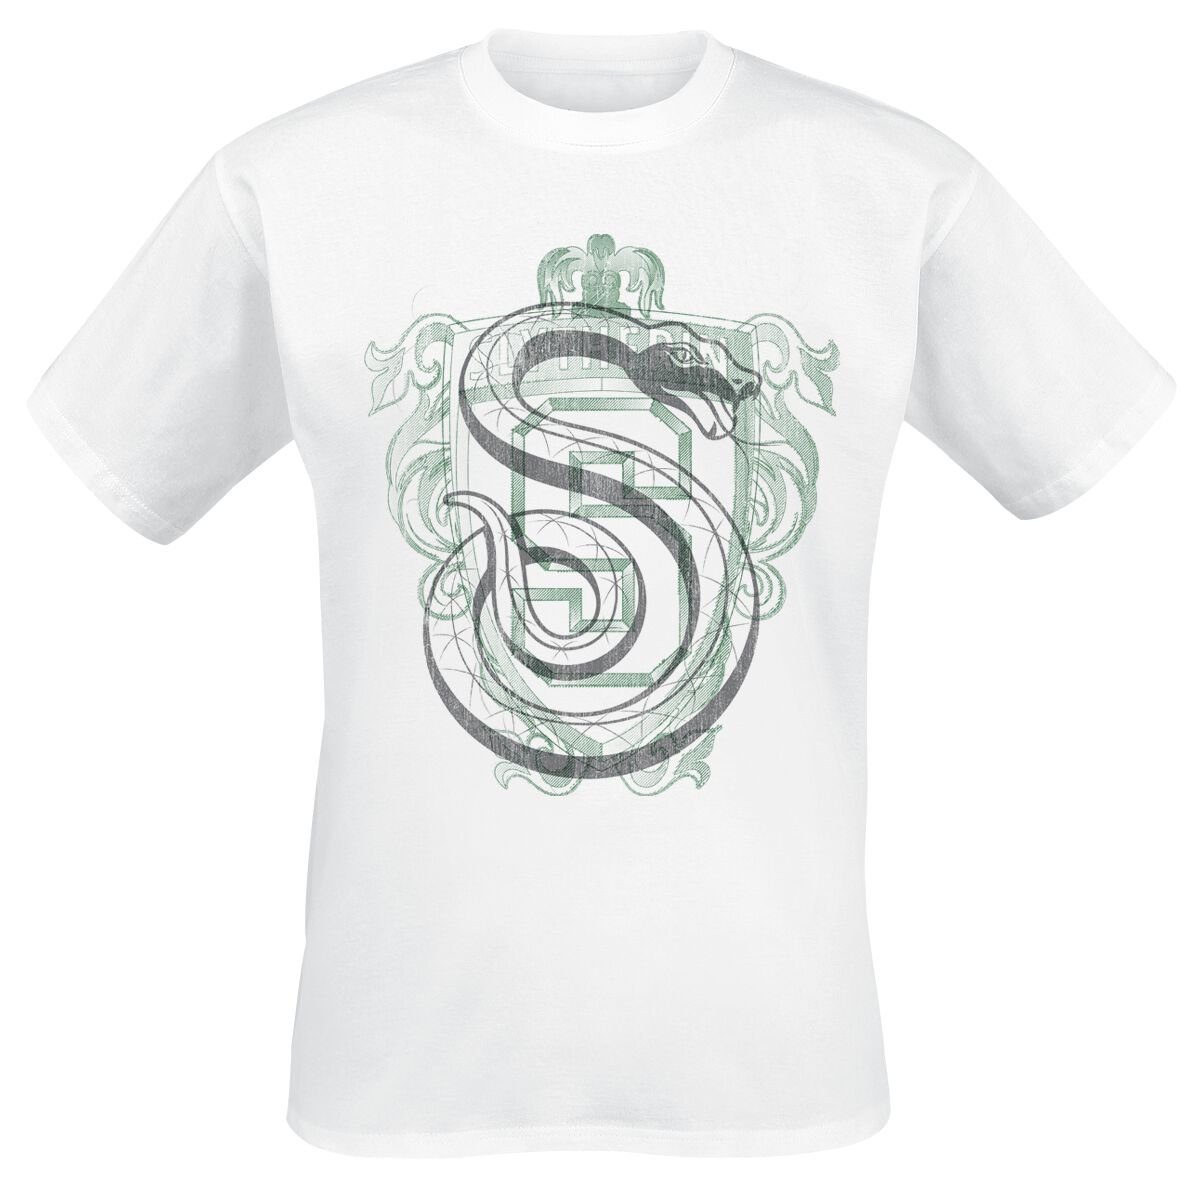 Harry Potter Slytherin Serpent Crest T-Shirt white